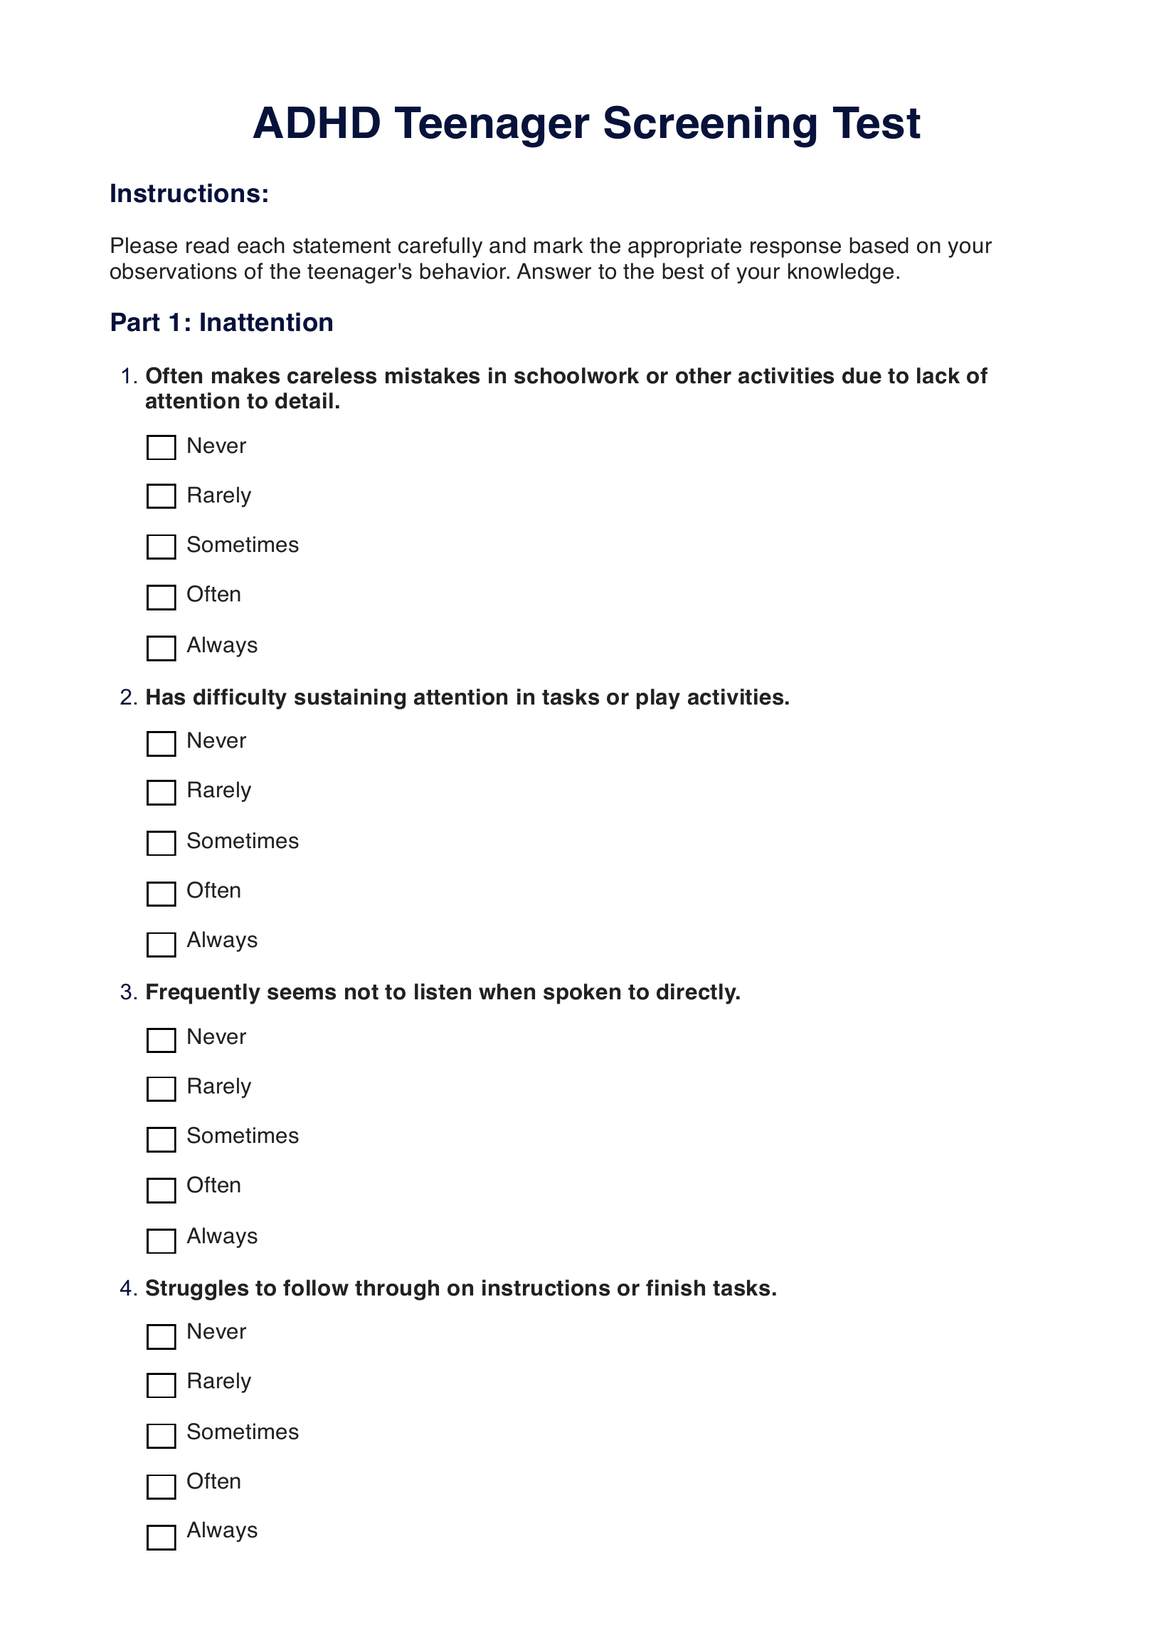 ADHD Teenager Test PDF Example